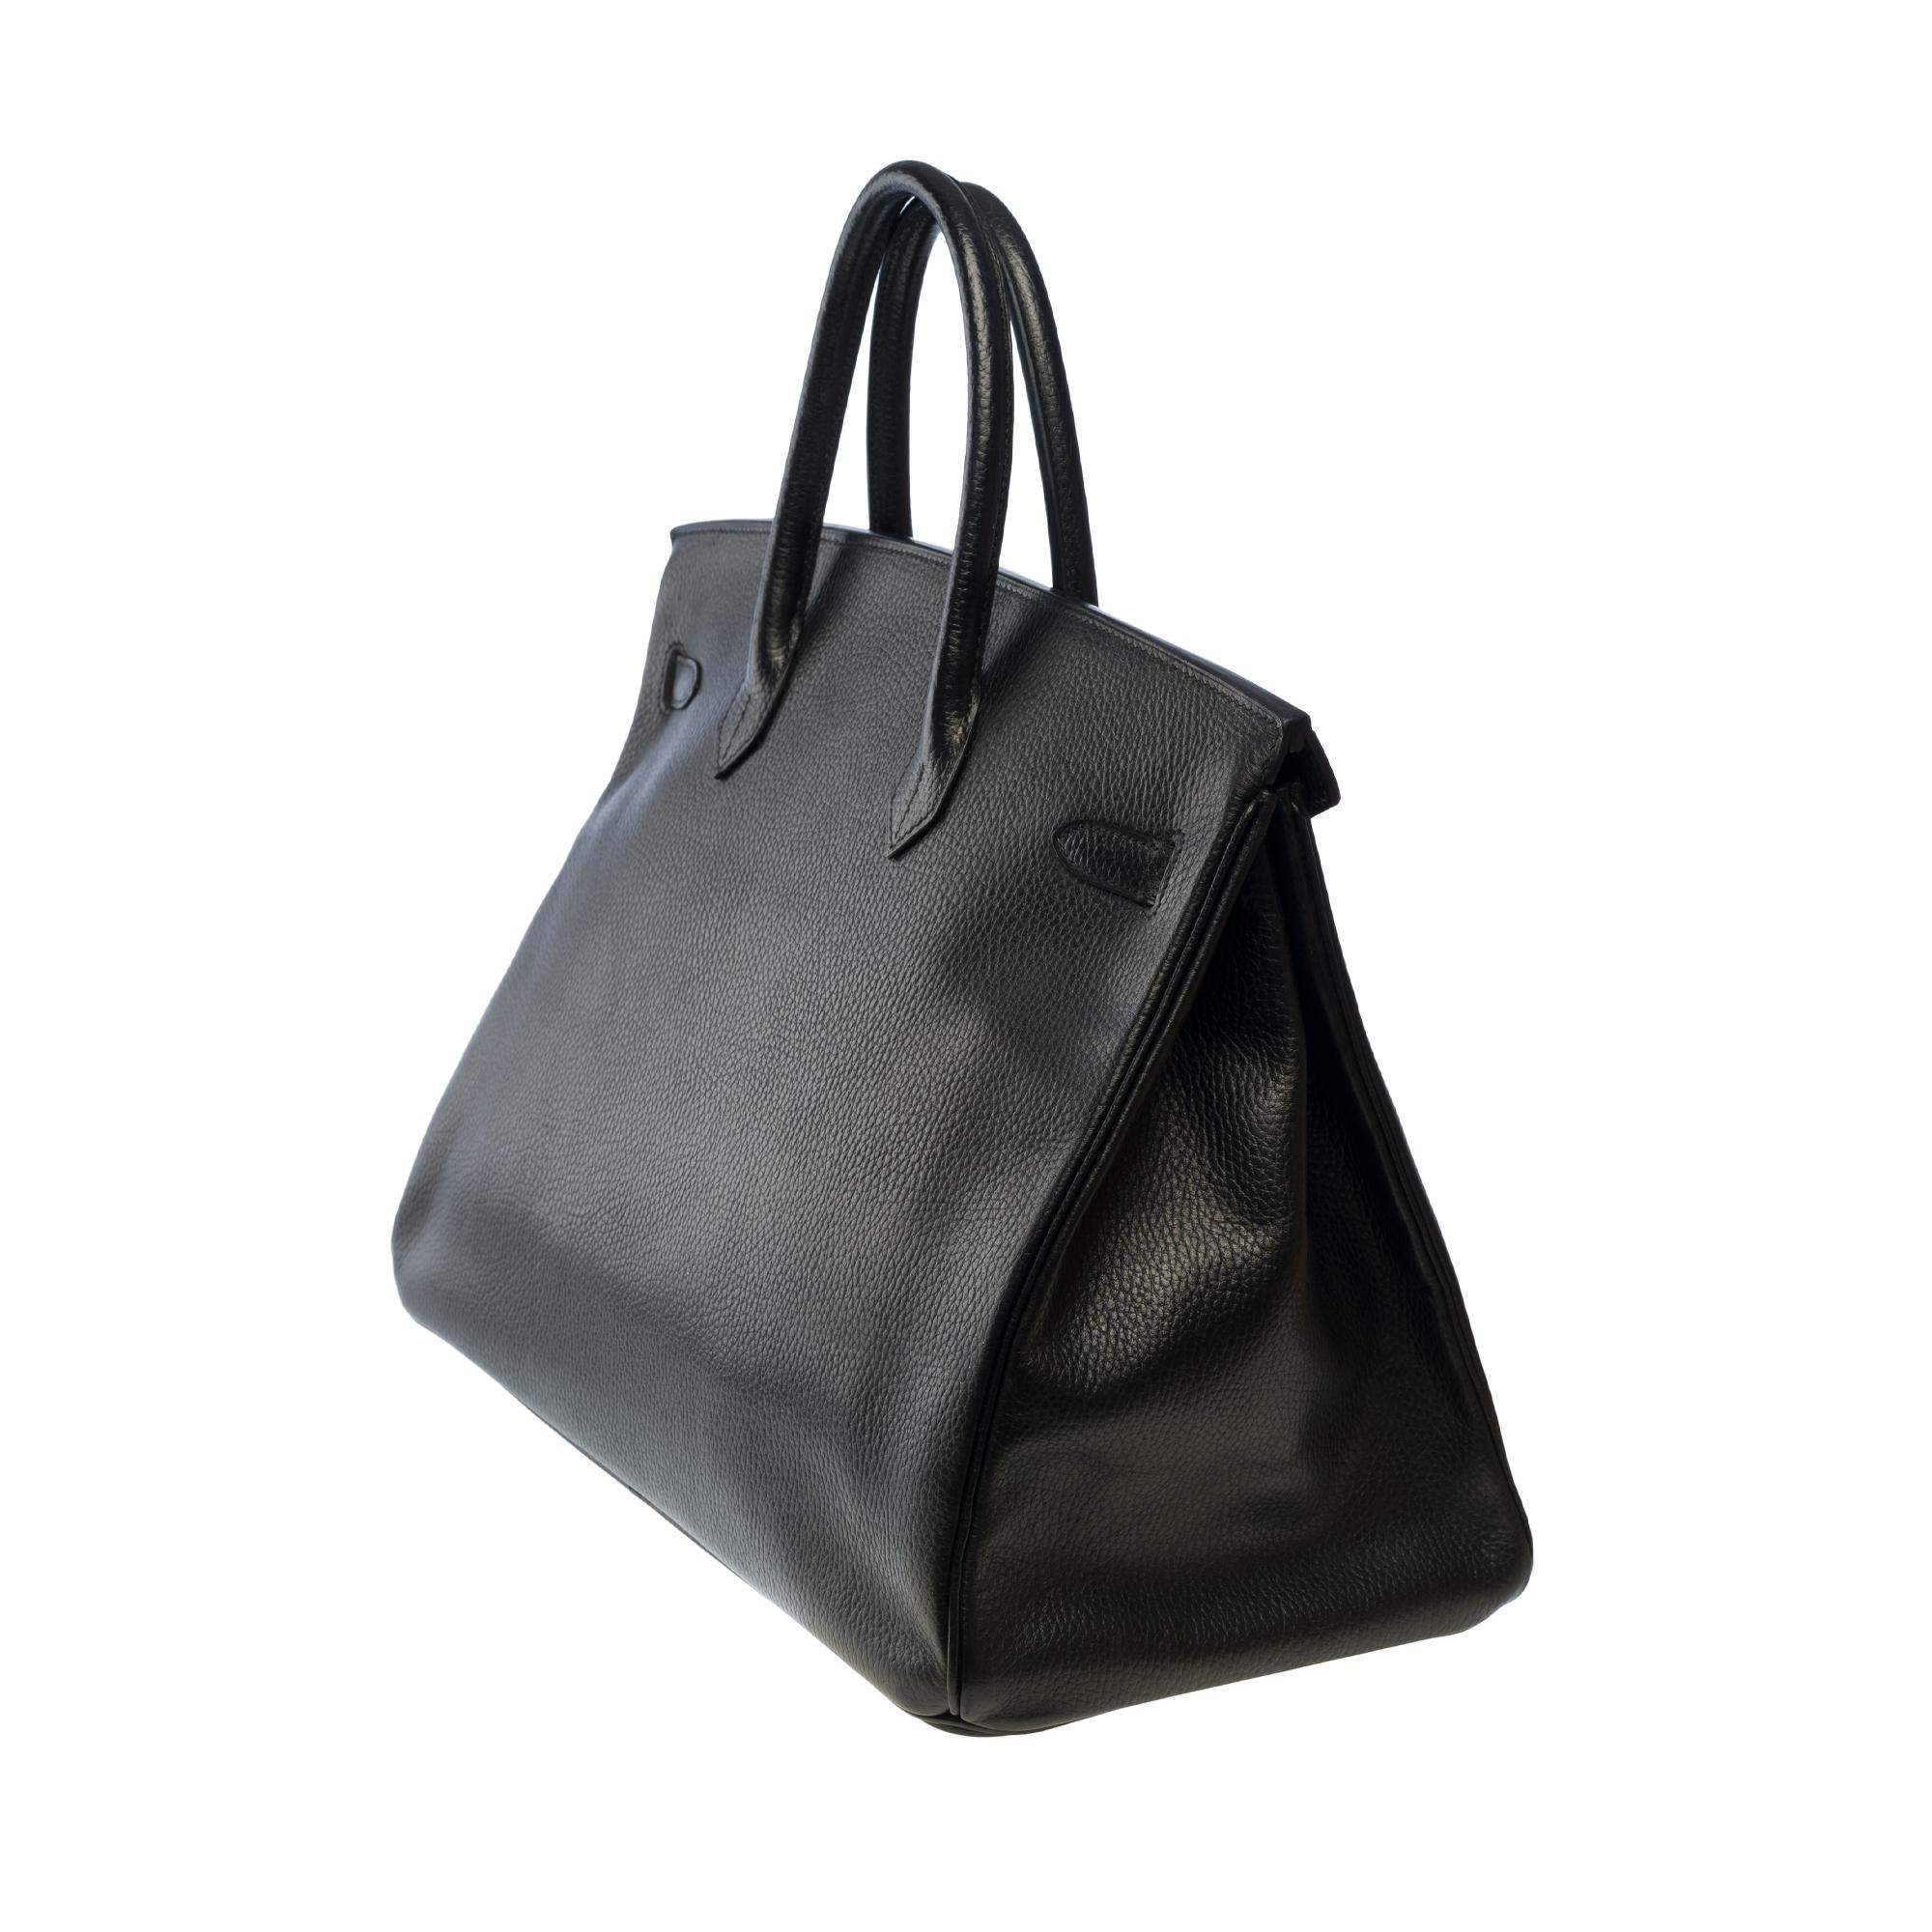 Women's or Men's Classy Hermes Birkin 40cm handbag in Black Fjord leather, GHW